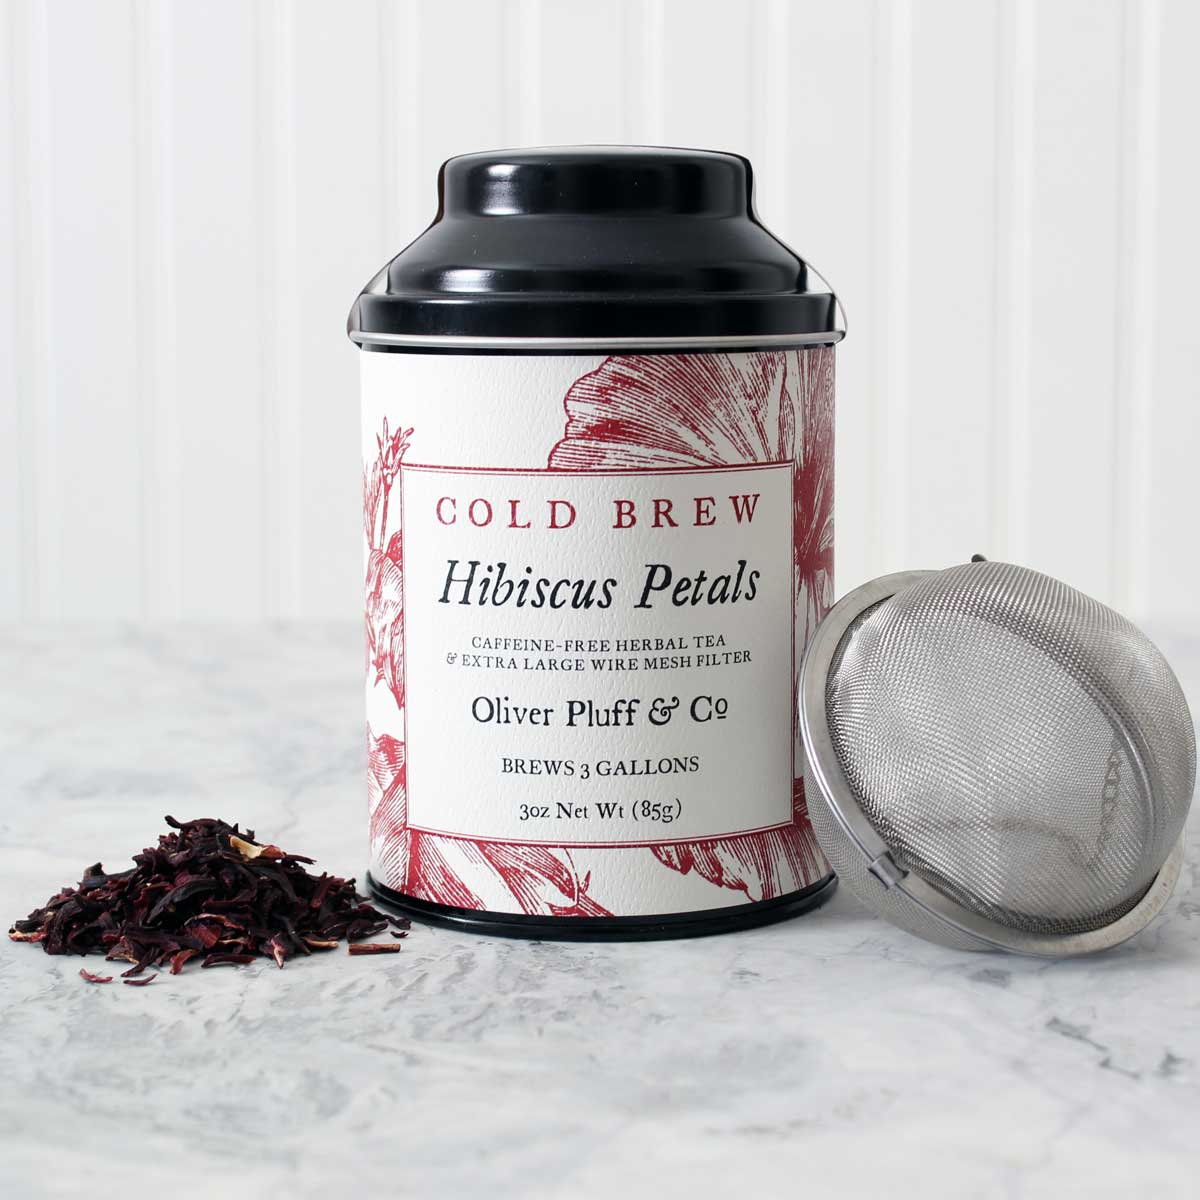 Oliver Pluff & Company - Hibiscus Petals Cold Brew